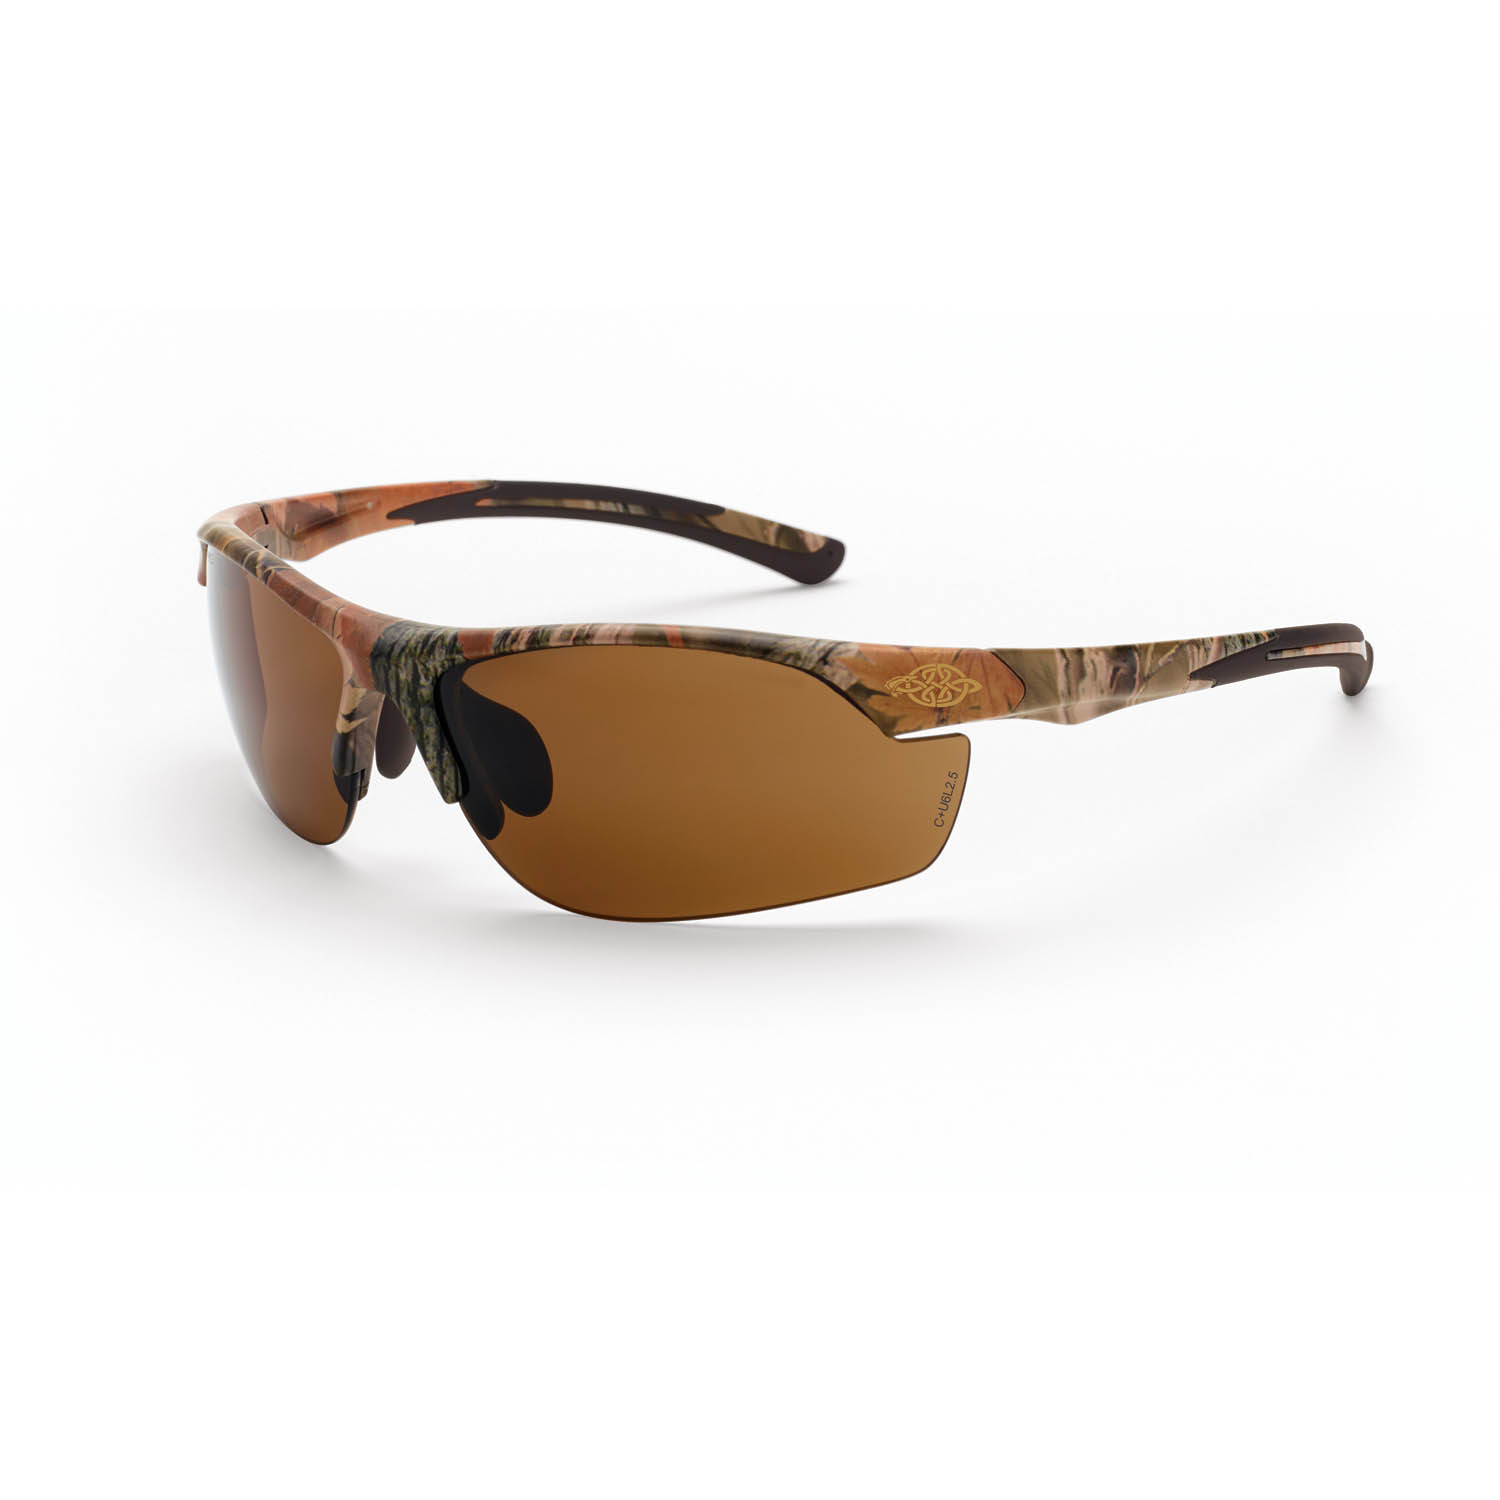 AR3 Premium Safety Eyewear - Woodland Brown Camo Frame - HD Brown Lens - Tinted Lens